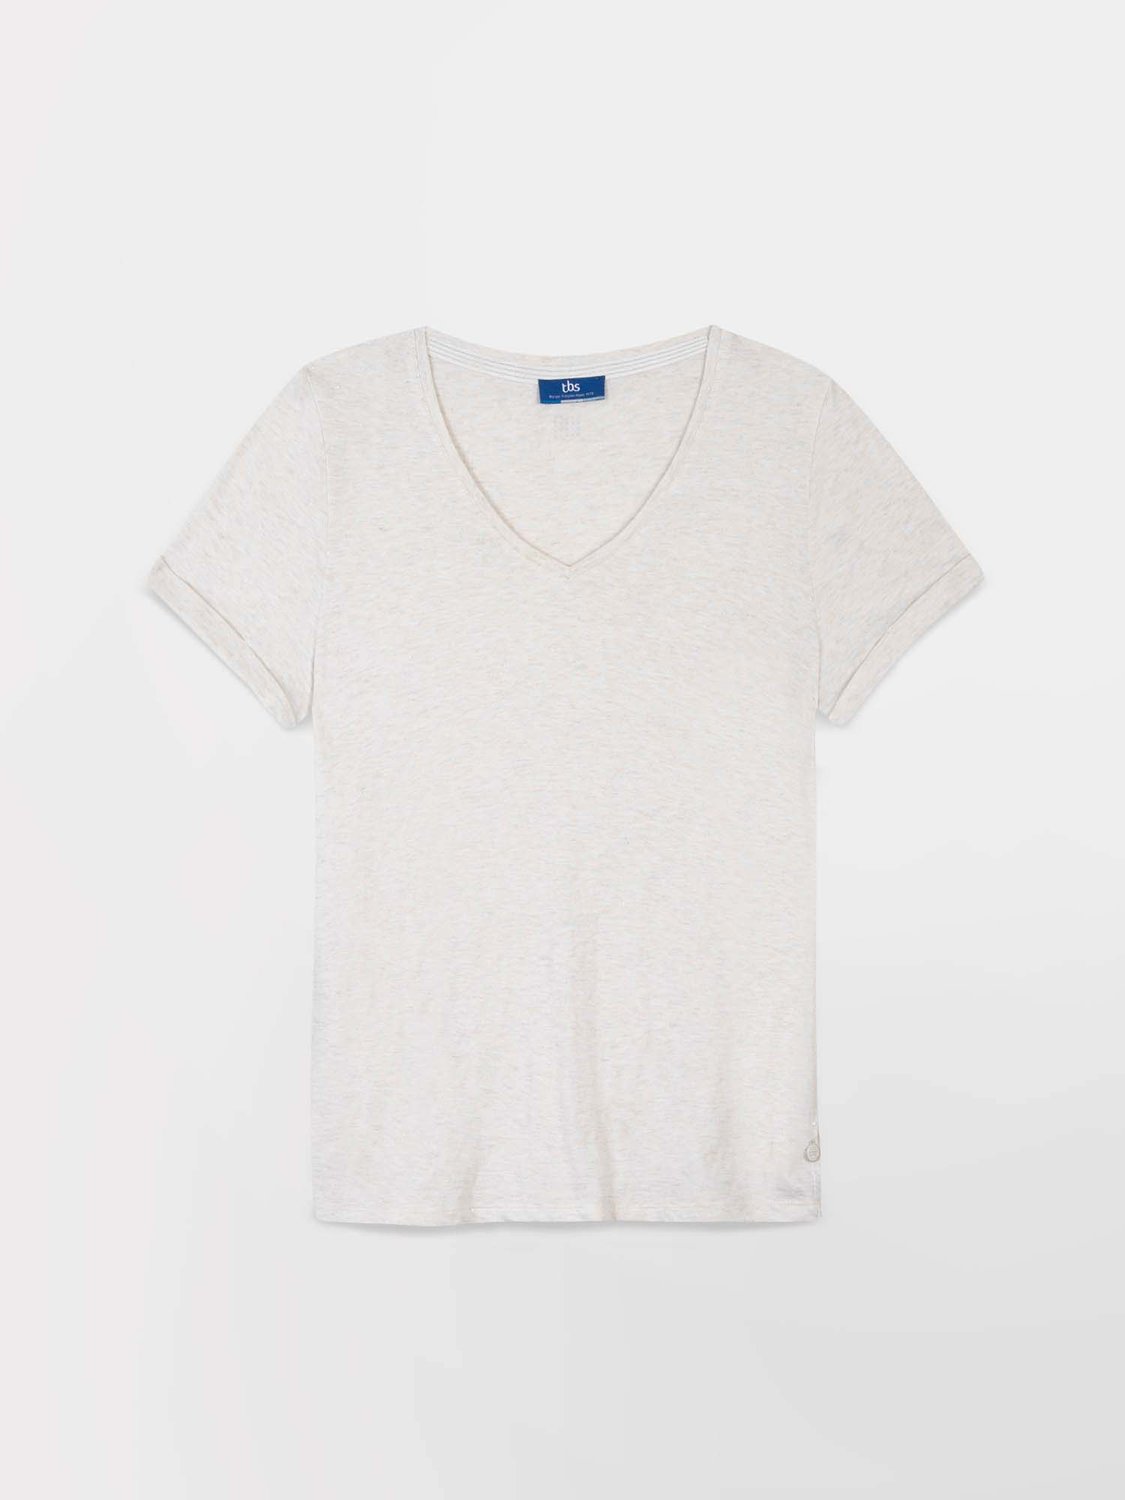 Tee-Shirt Femme Col V Jersey Coton Blanc